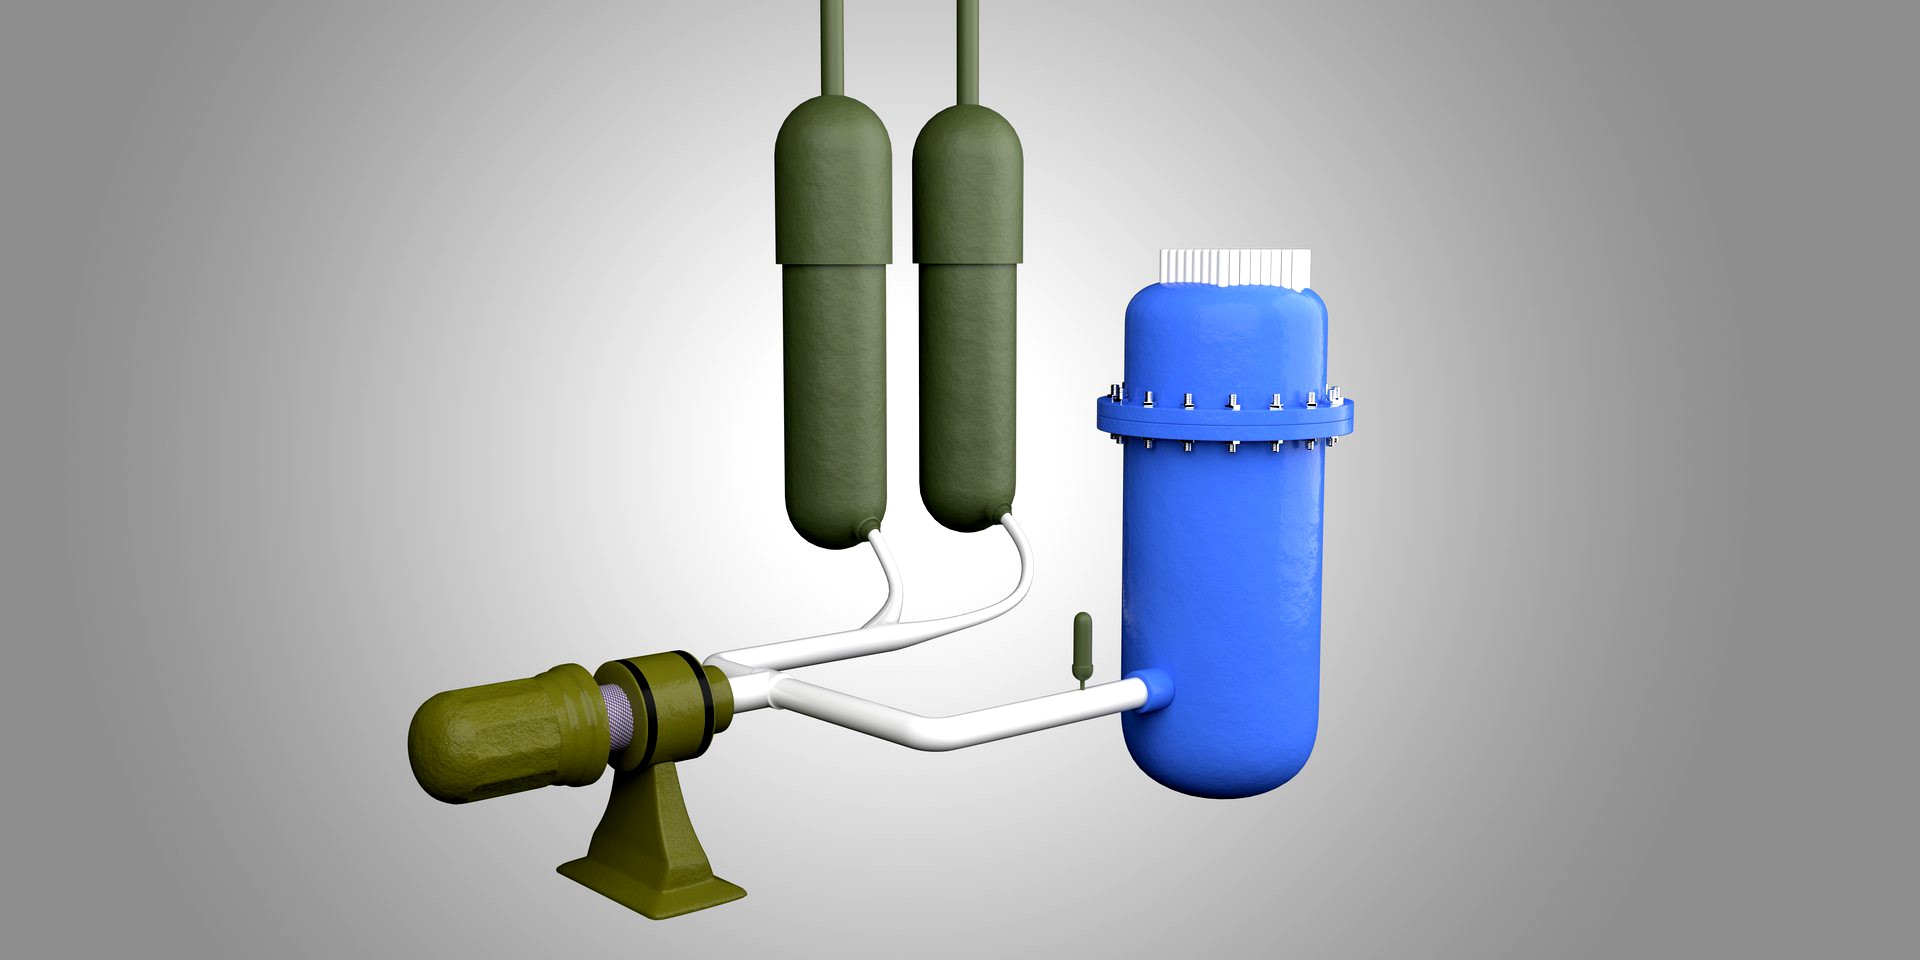 Pressurized water reactor